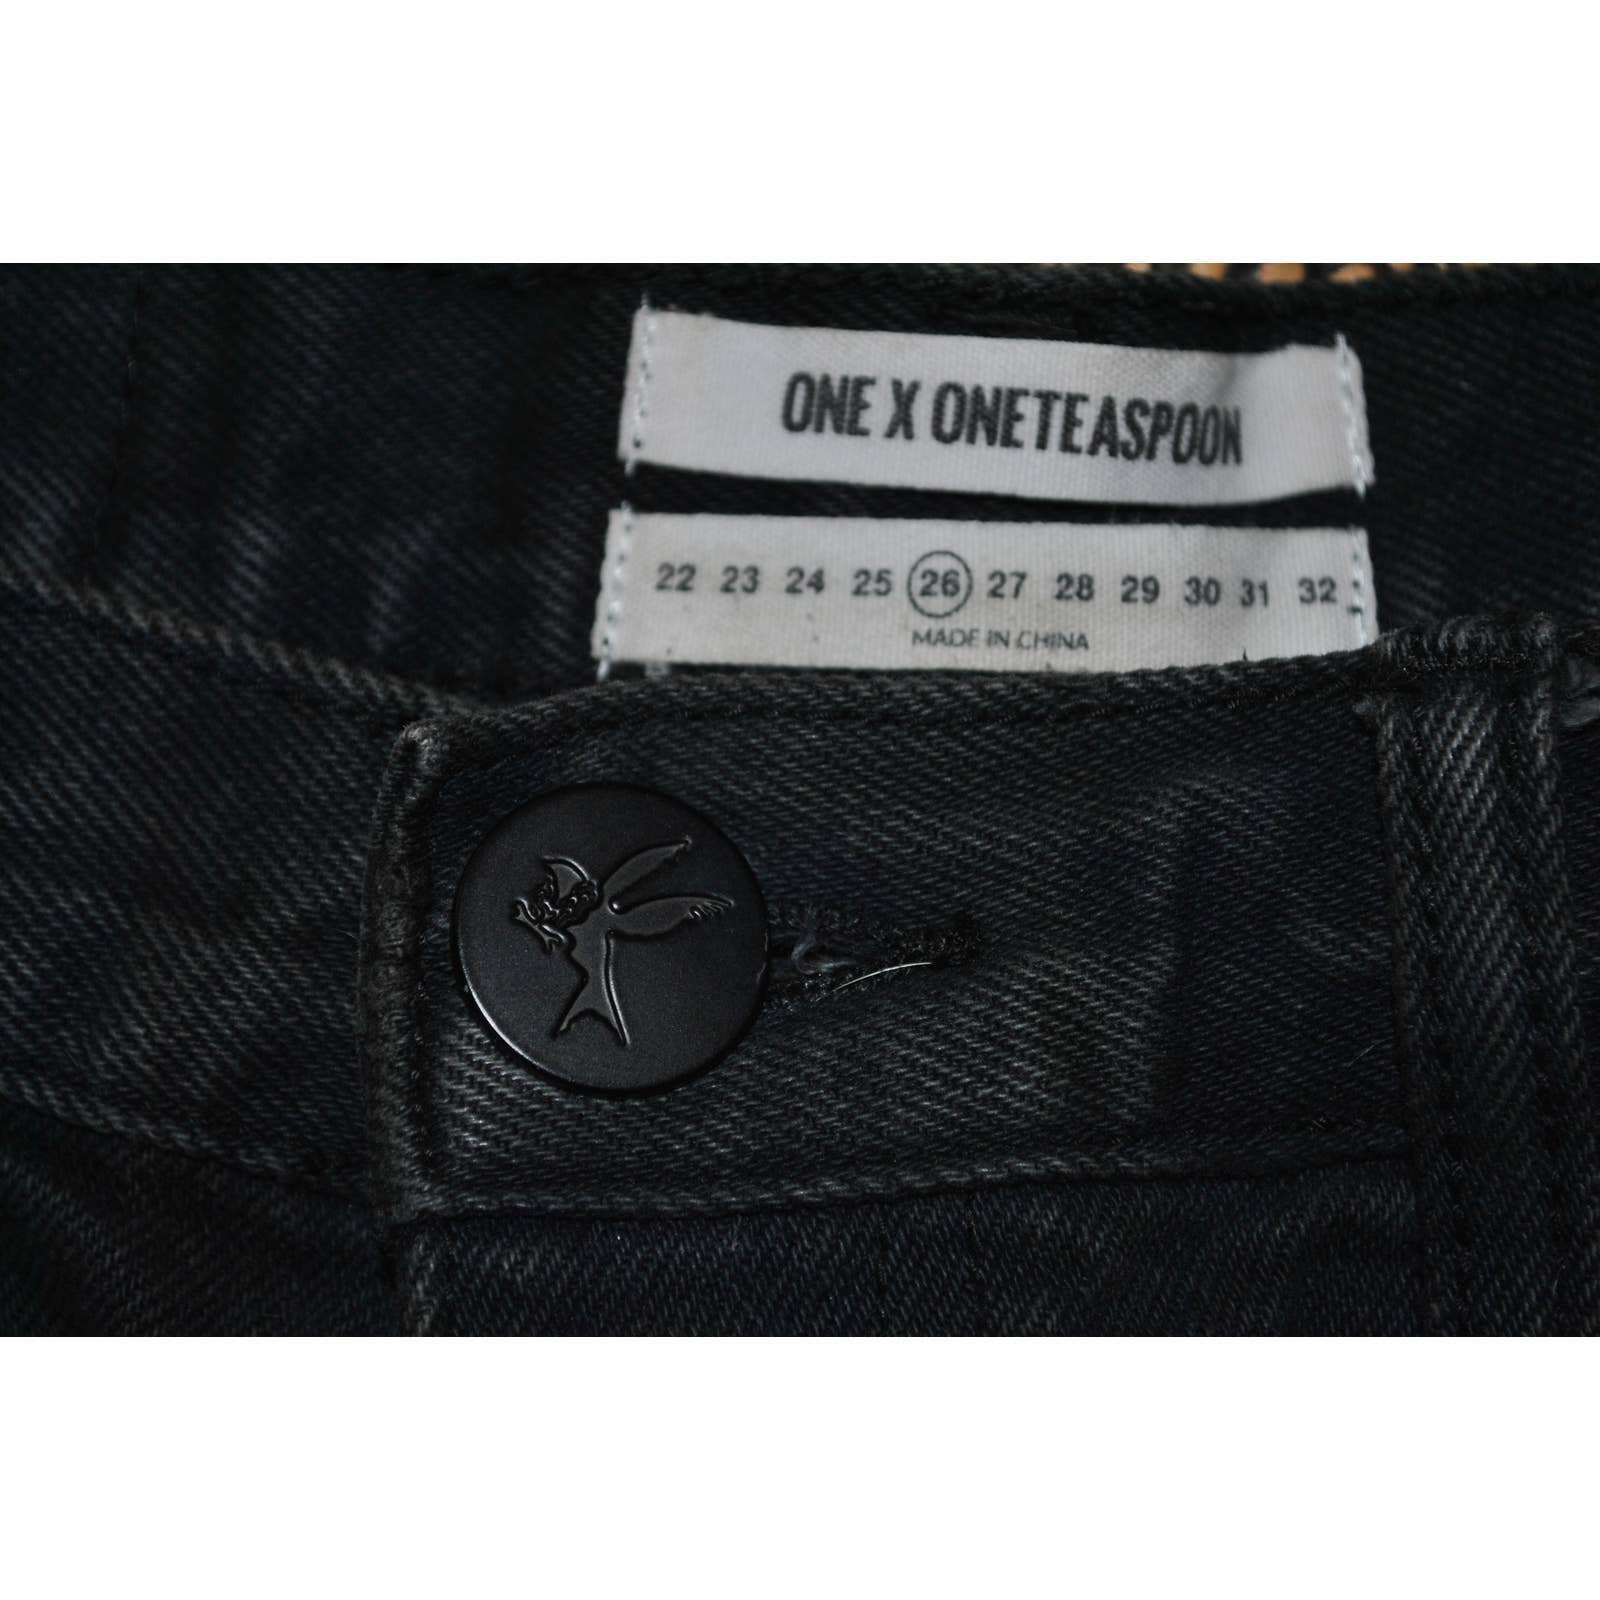 One X One Teaspoon Black Fray Hem Short Shorts - 26